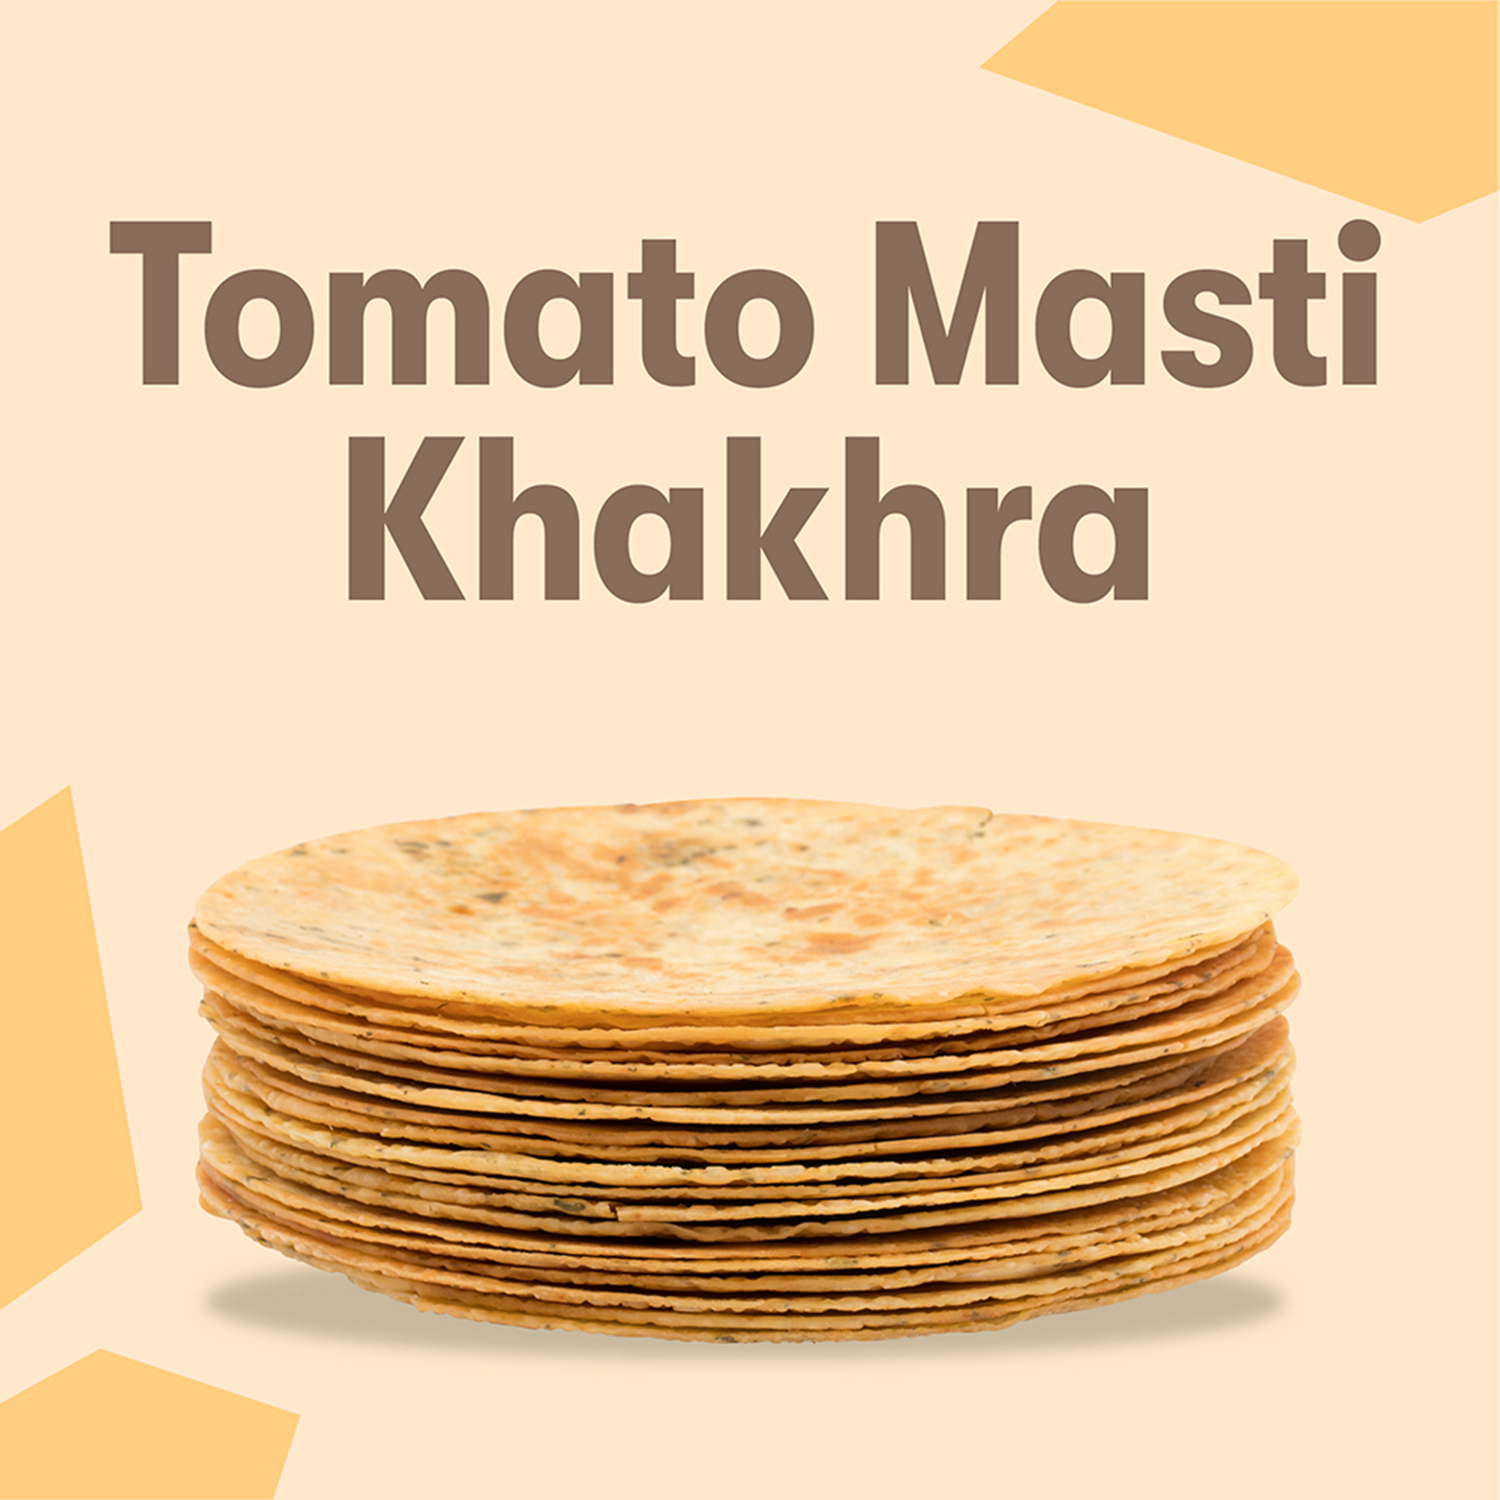 Tomato Masti Khakhra (Pack of 3)